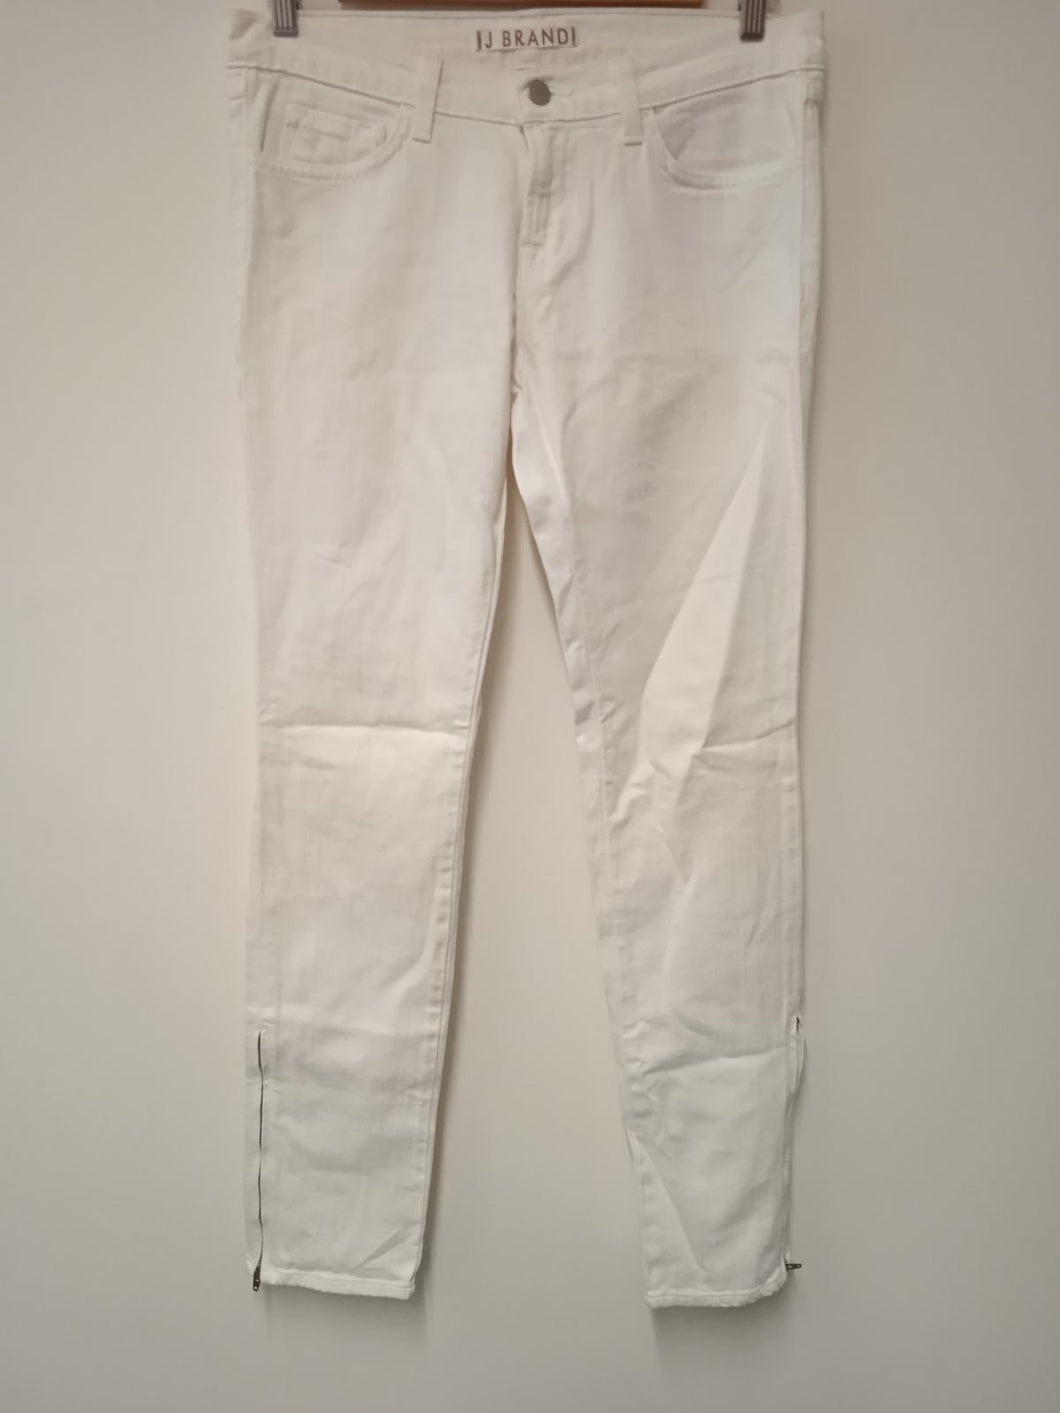 J BRAND Ladies White Cotton Blend Ankle Zip Low Rise Slim Fit Jeans Size 29